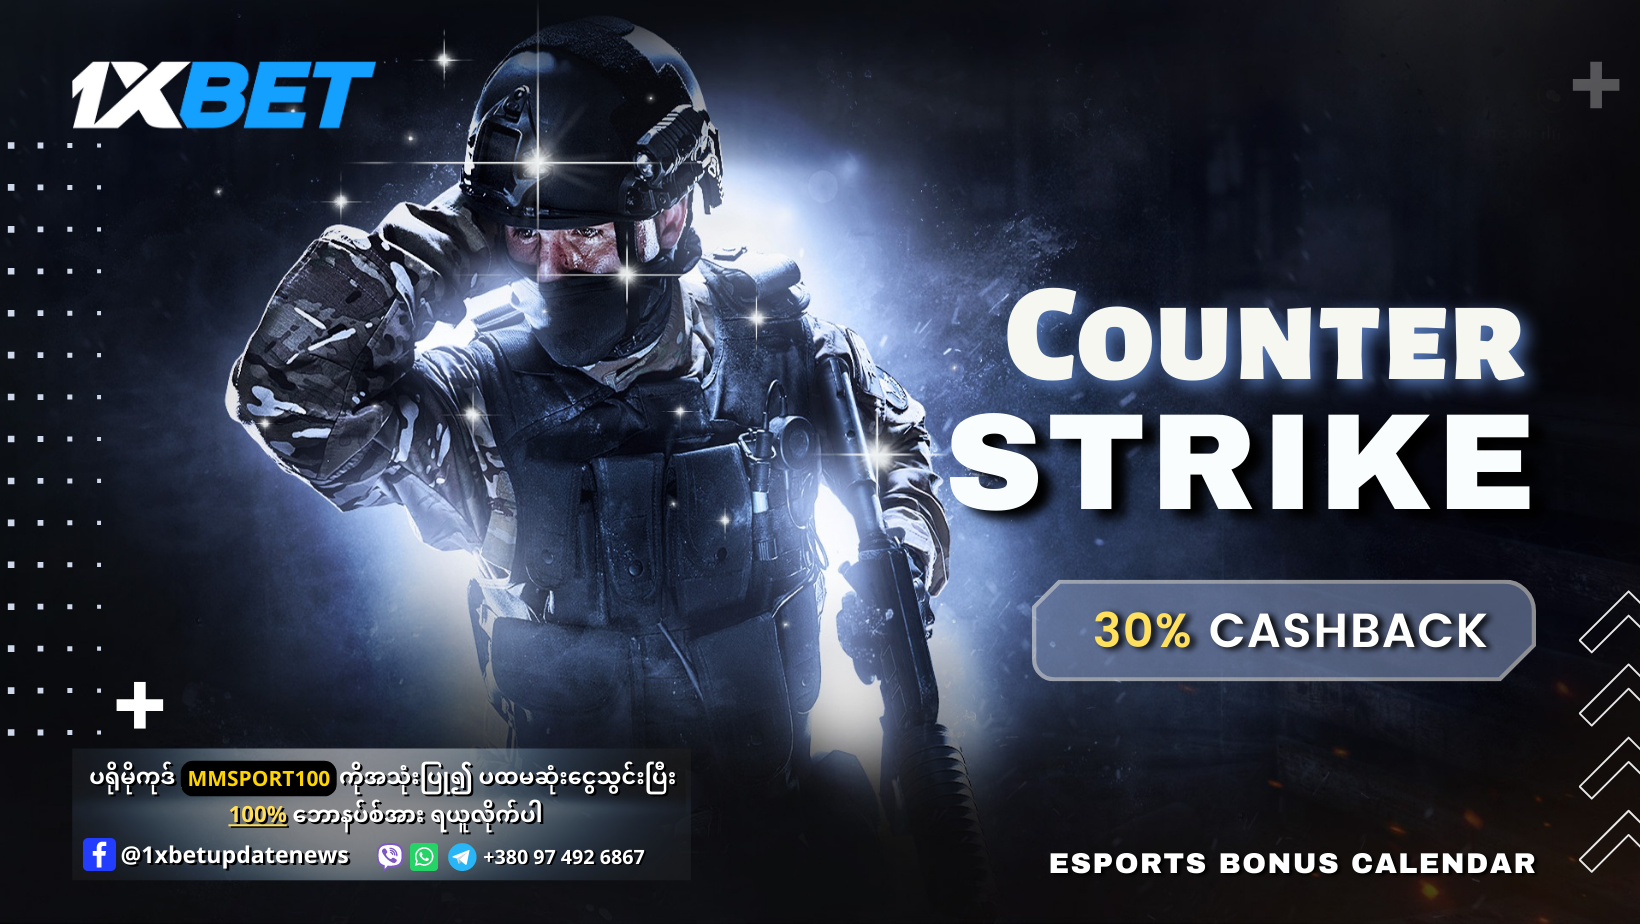 Counter Strike Esports Promotion